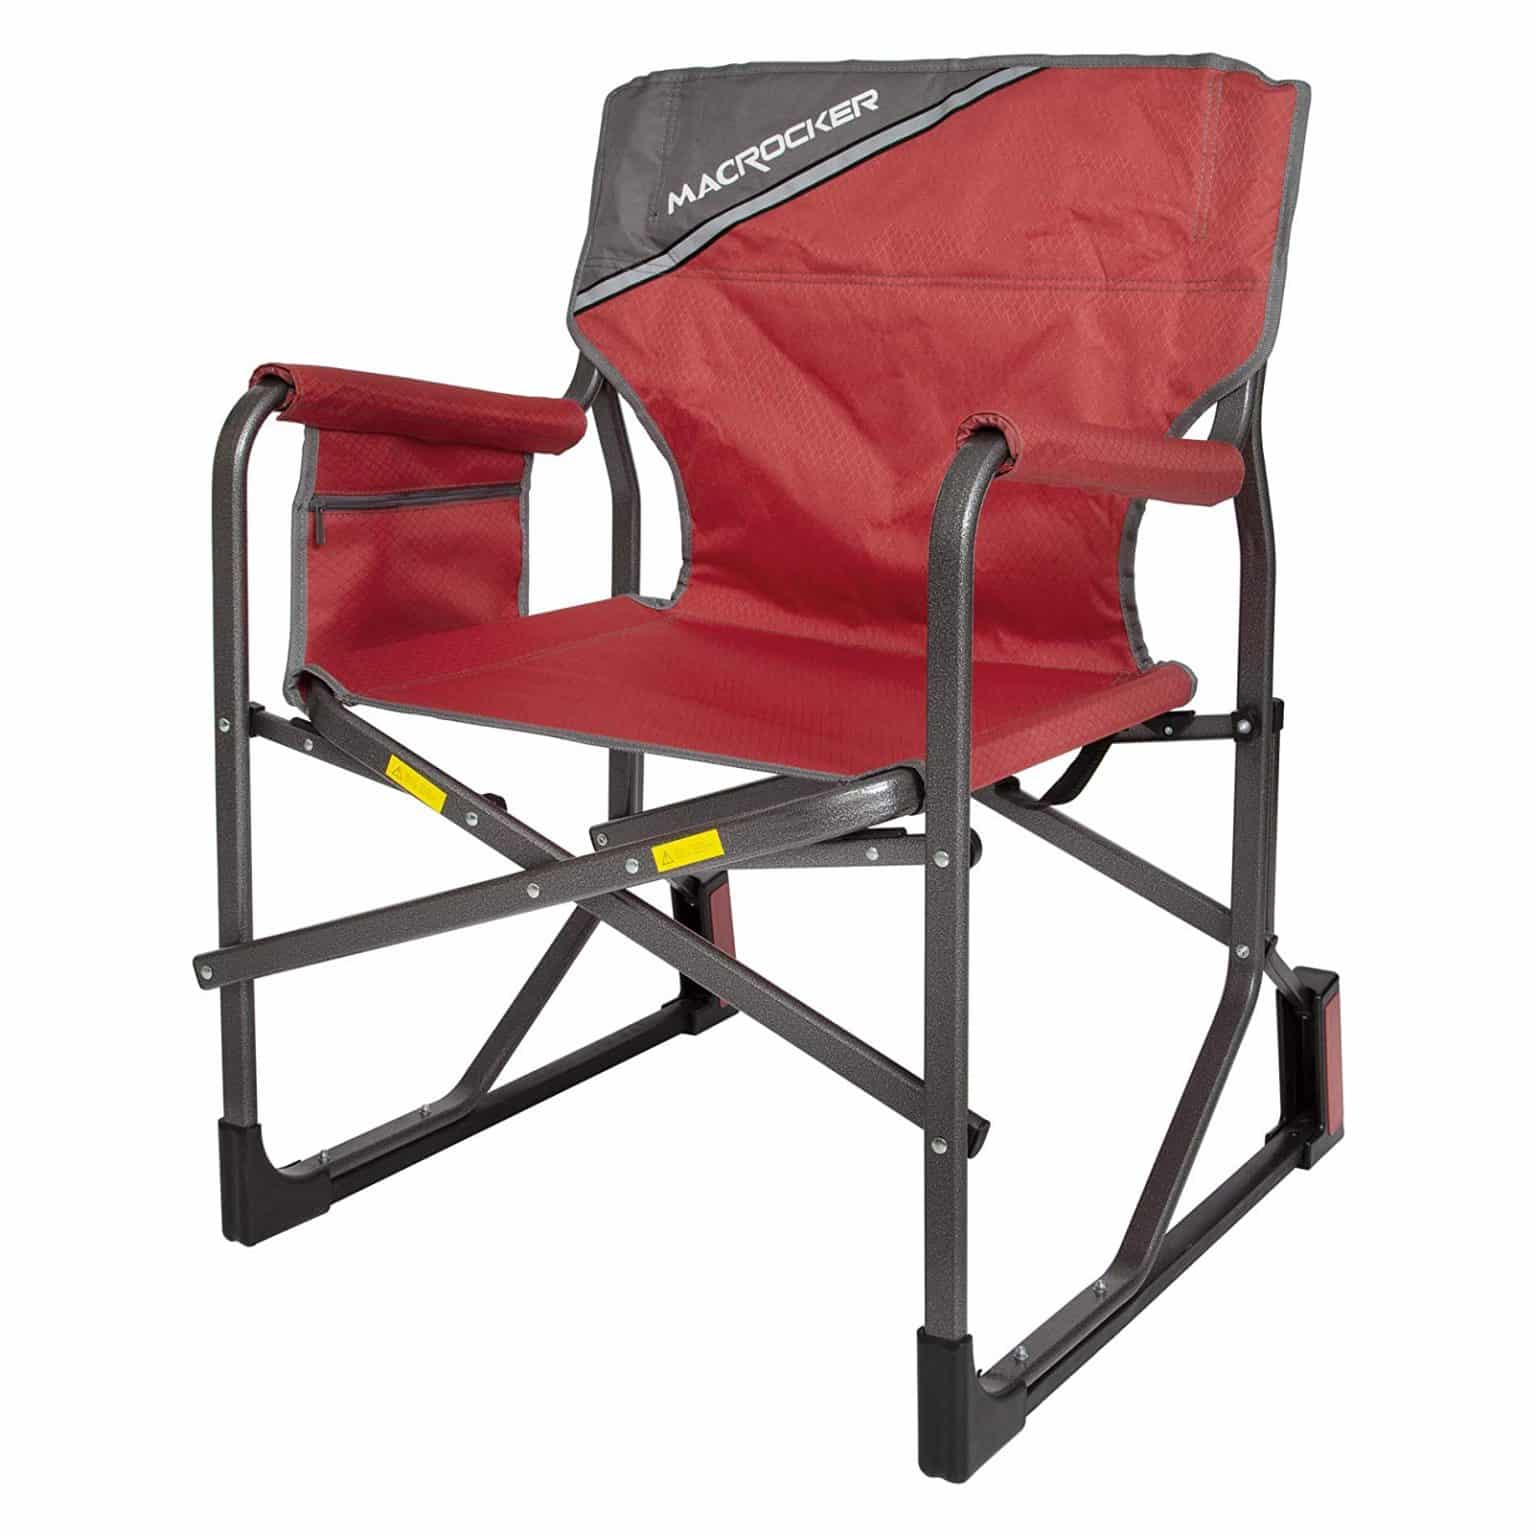 5. MacSports MacRocker Outdoor Foldable Rocking Chair 1536x1536 